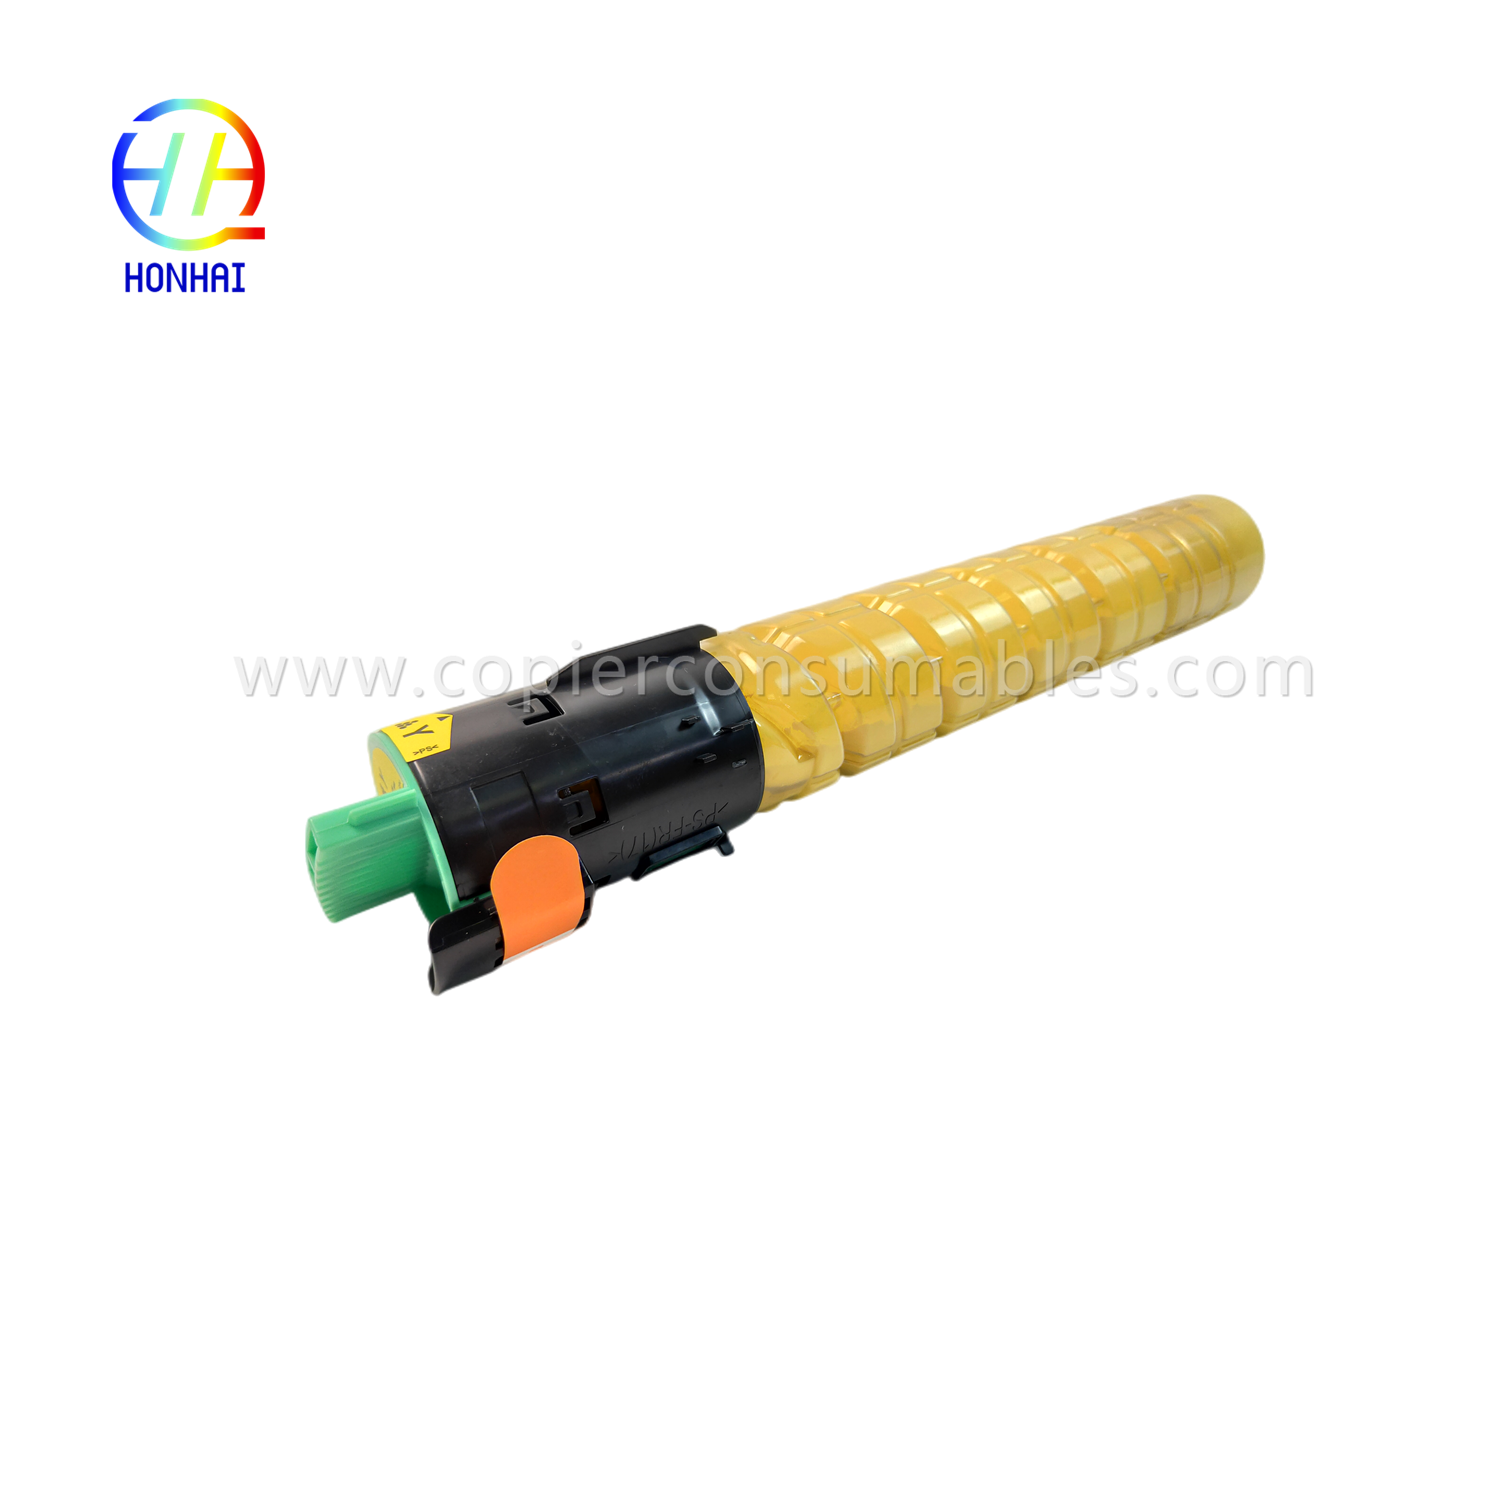 https://www.copierconsumables.com/toner-cartridge- yellow-for-ricoh-aficio-mpc2051-mpc2551-841501-product/